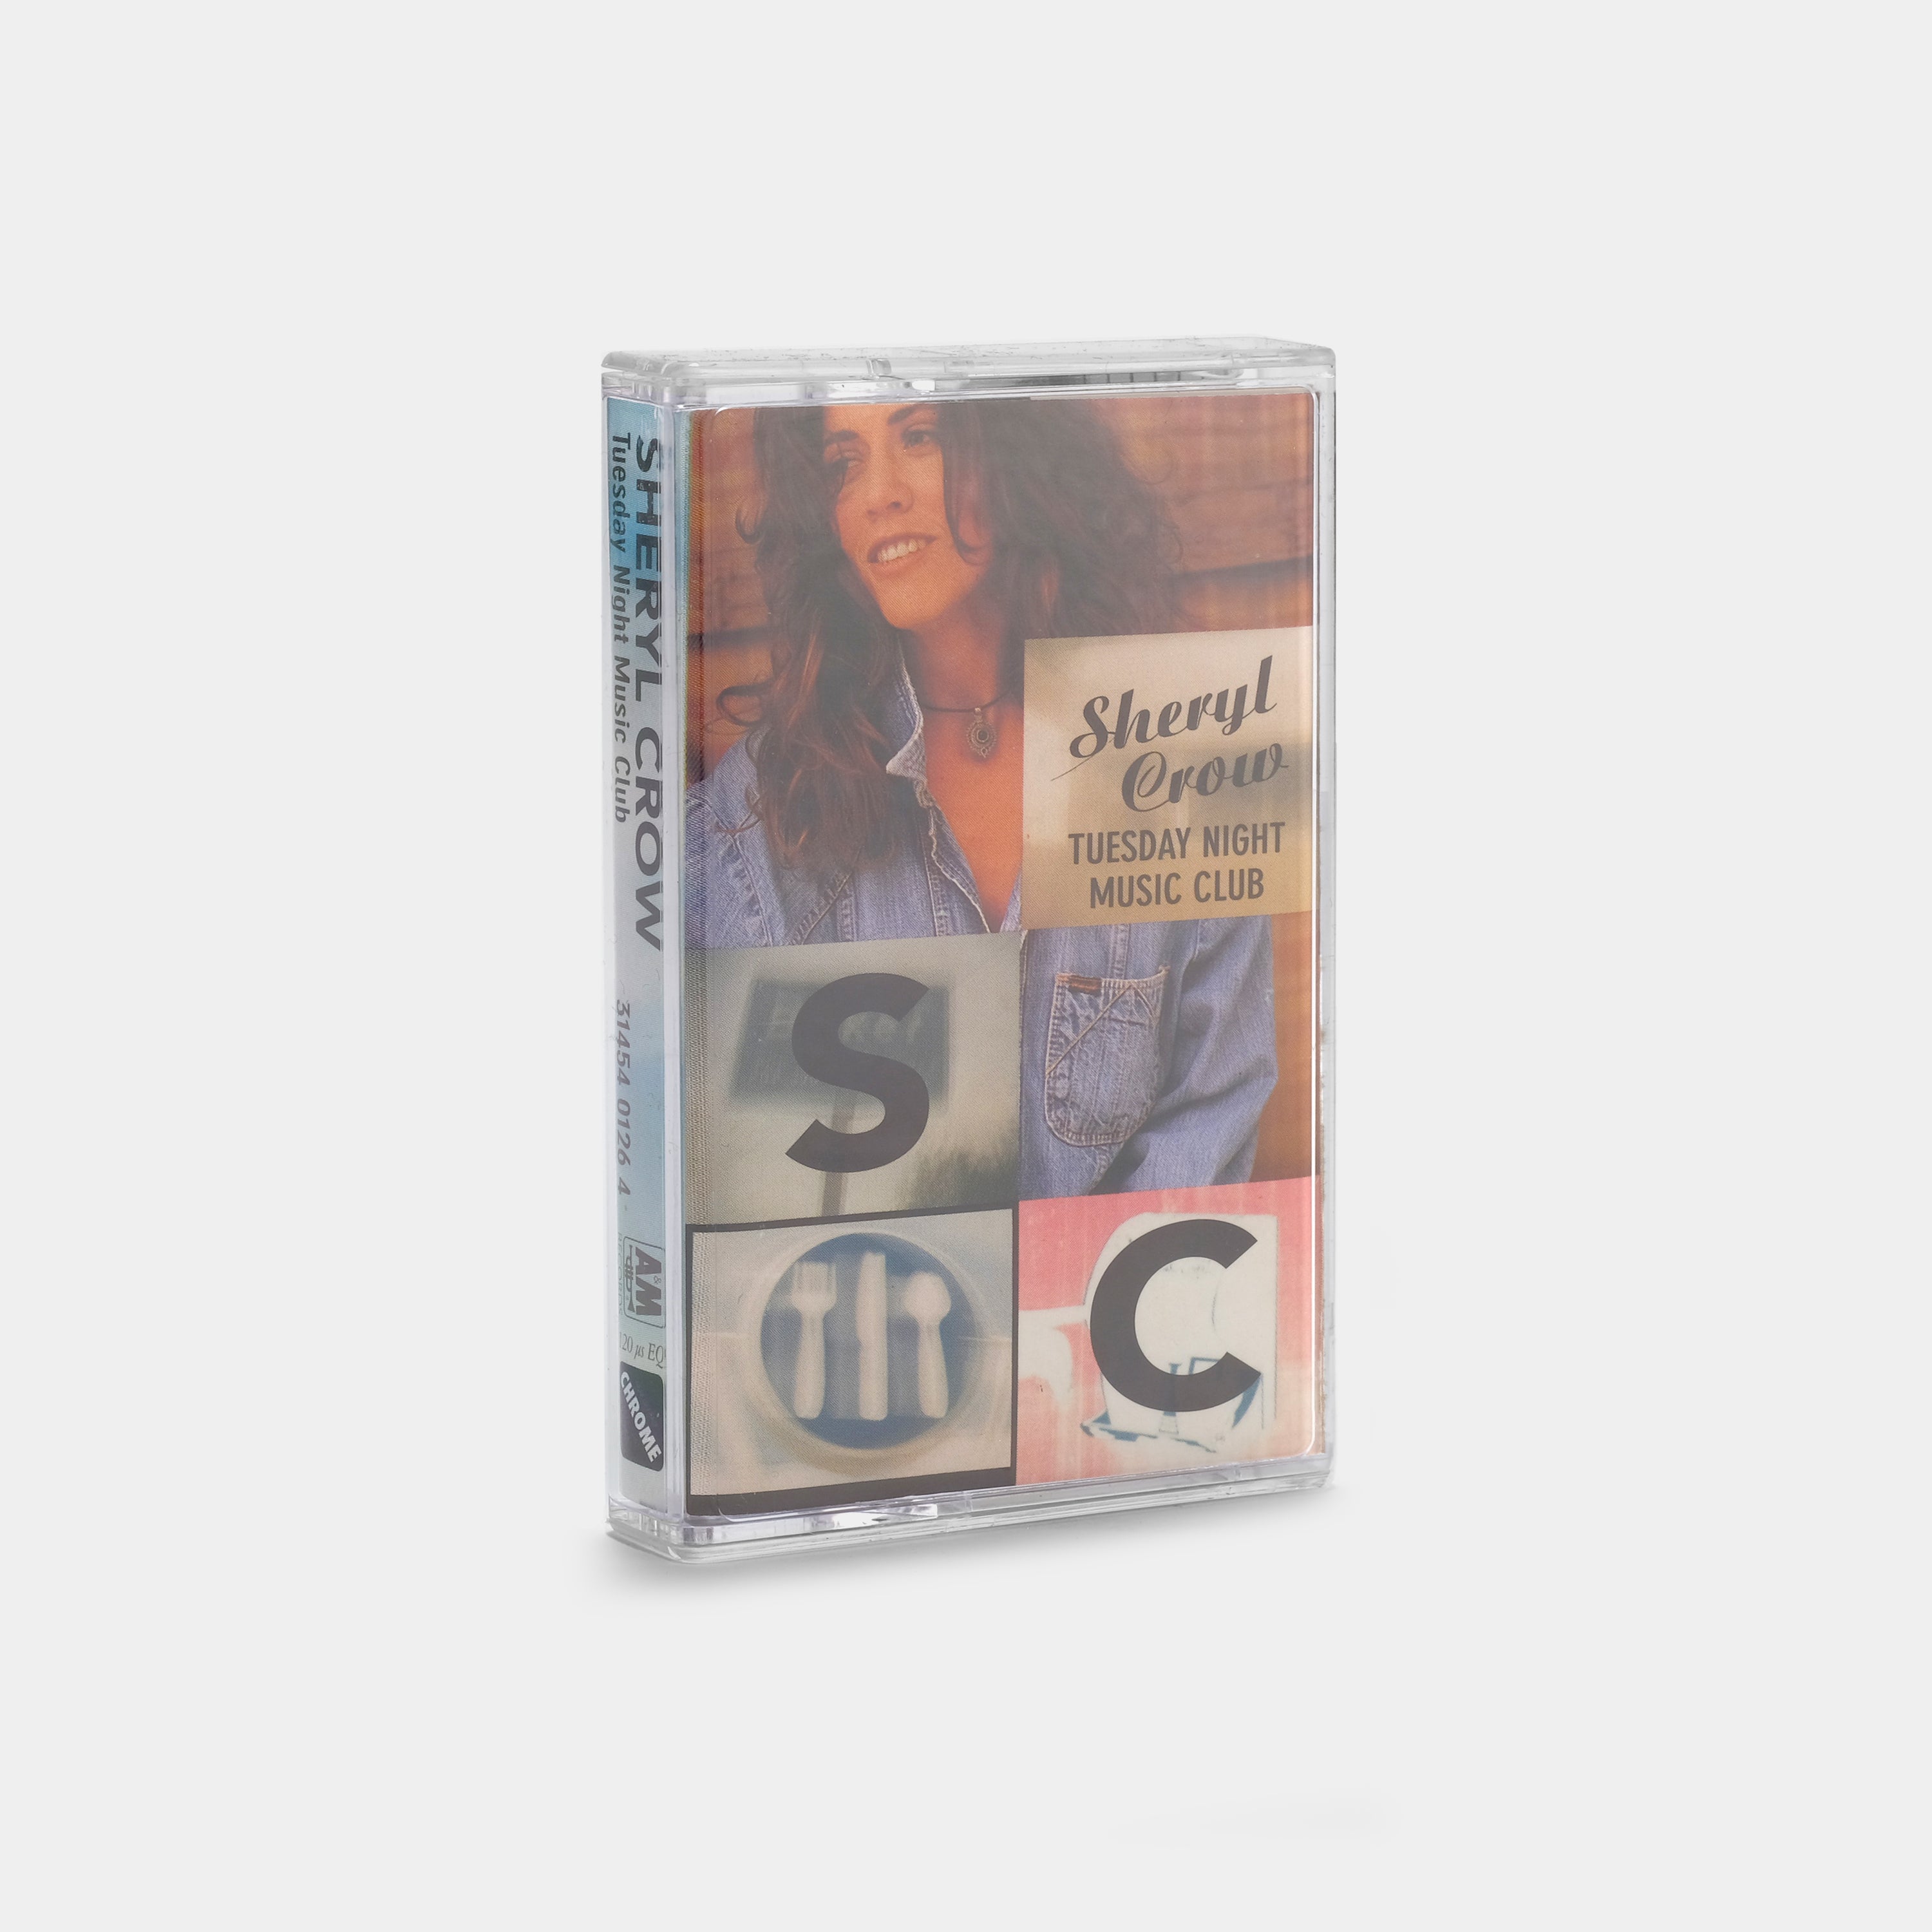 Sheryl Crow - Tuesday Night Music Club Cassette Tape